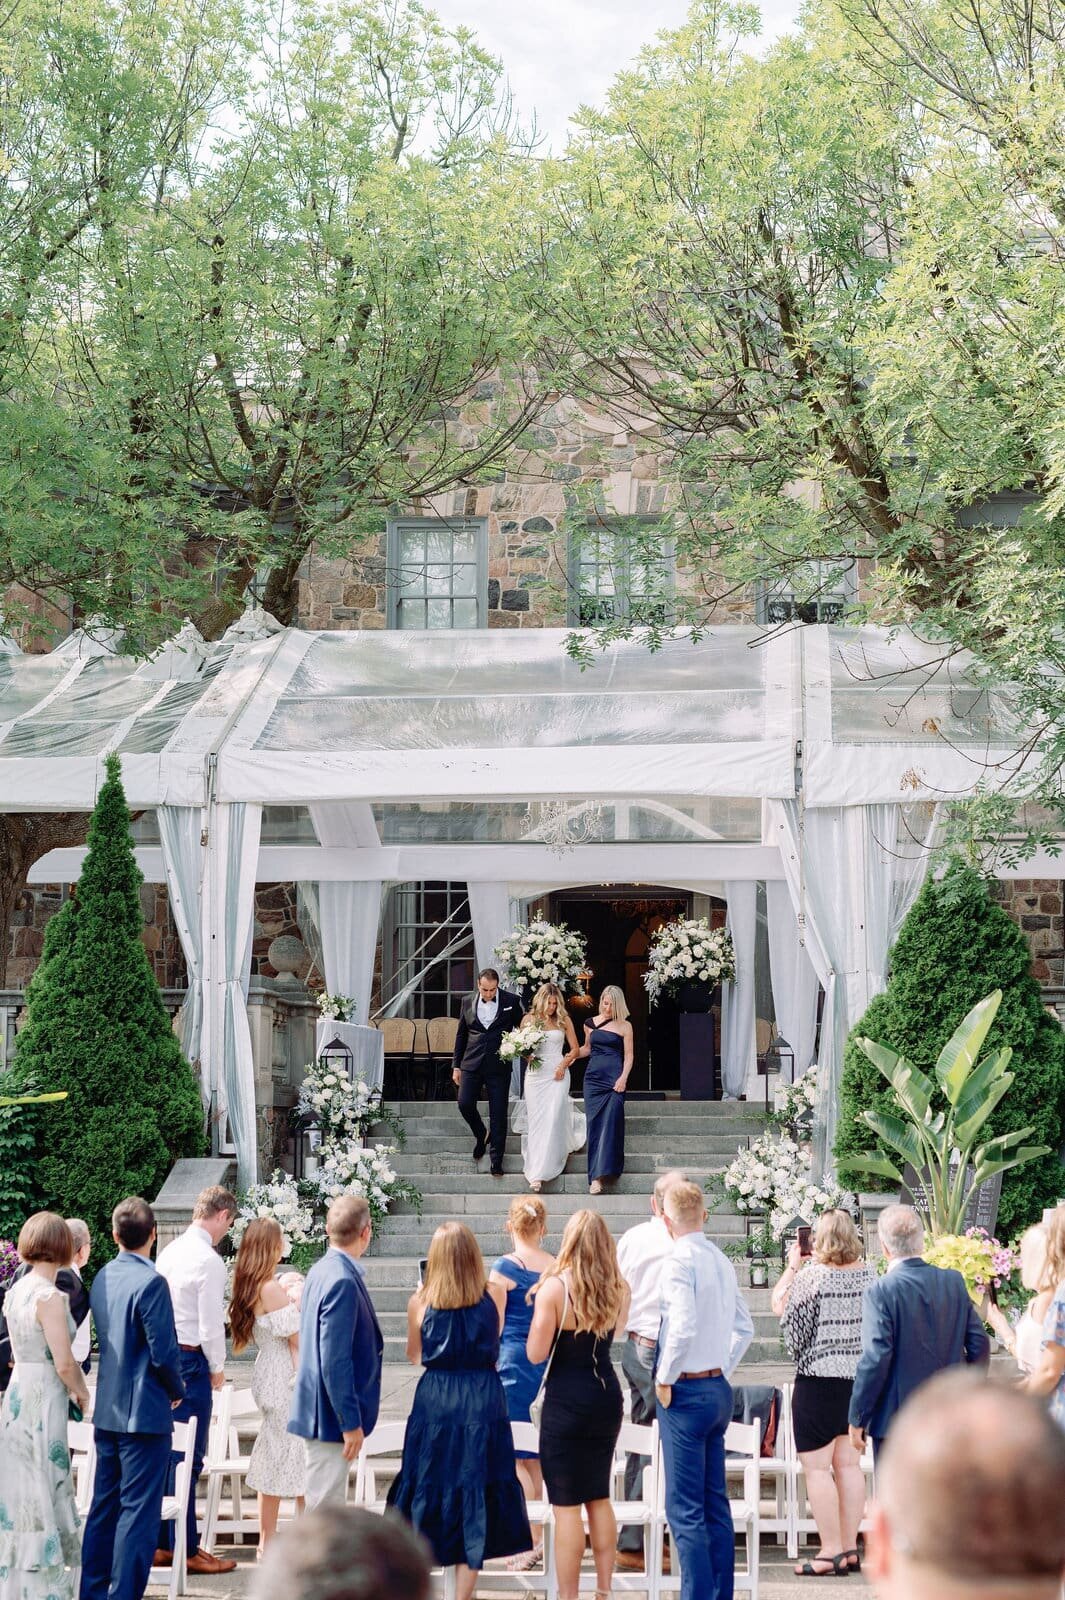 Brides Entrance into Ceremony at Graydon Hall Manor Toronto Jacqueline James Photography